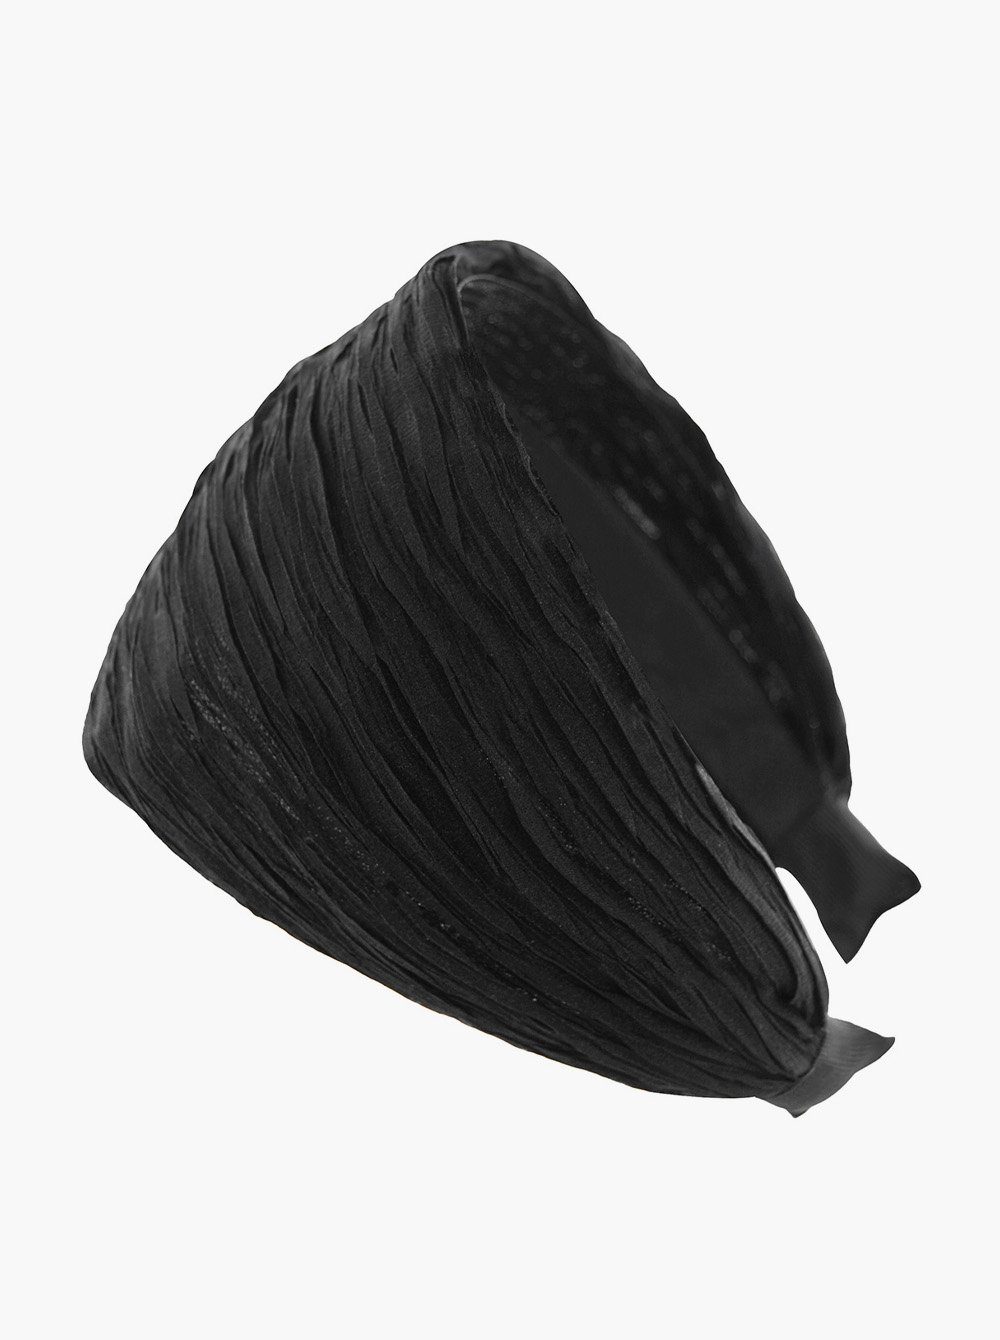 Stoff) Haarband Haarreifen in axy (Plissierter Breiter Schwarz Haarreif Tuchoptik Haarreif Wunderschön, Haarreif Breiter Damen